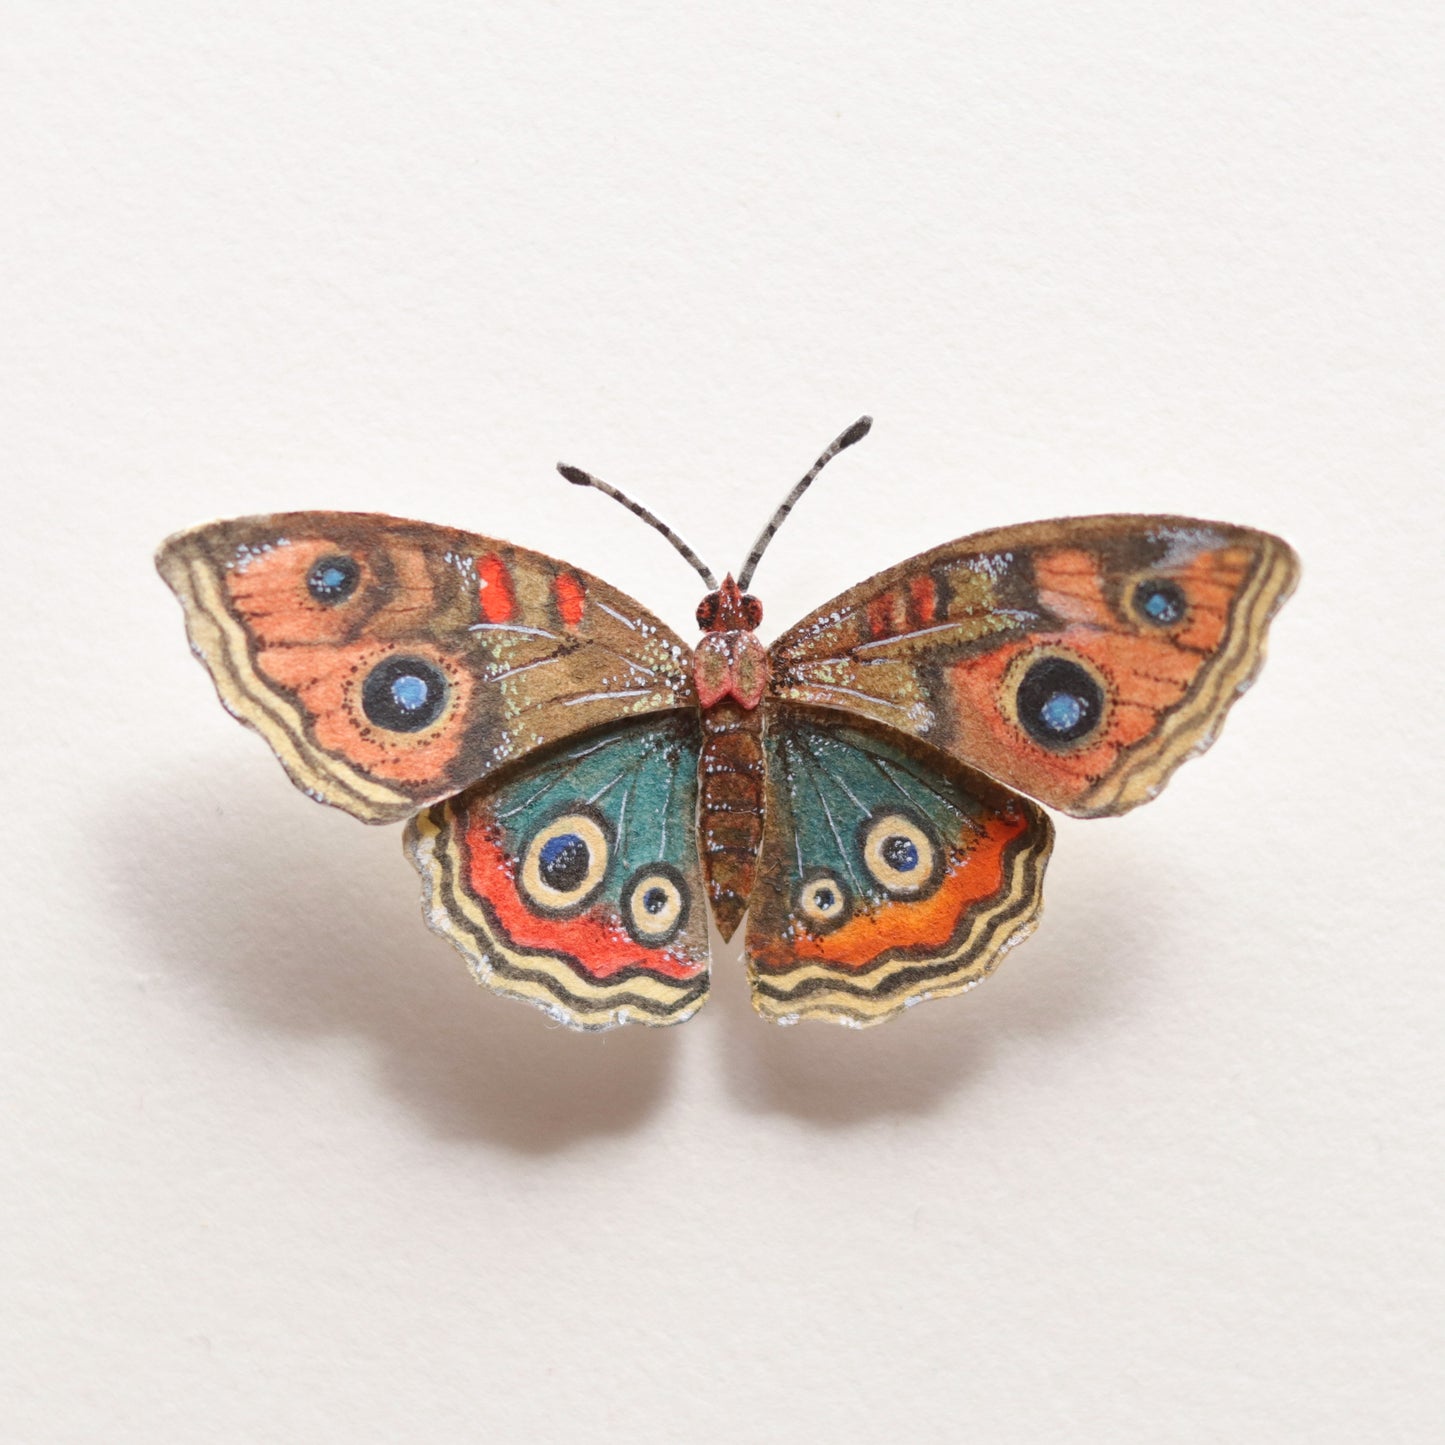 Common buckeye butterfly